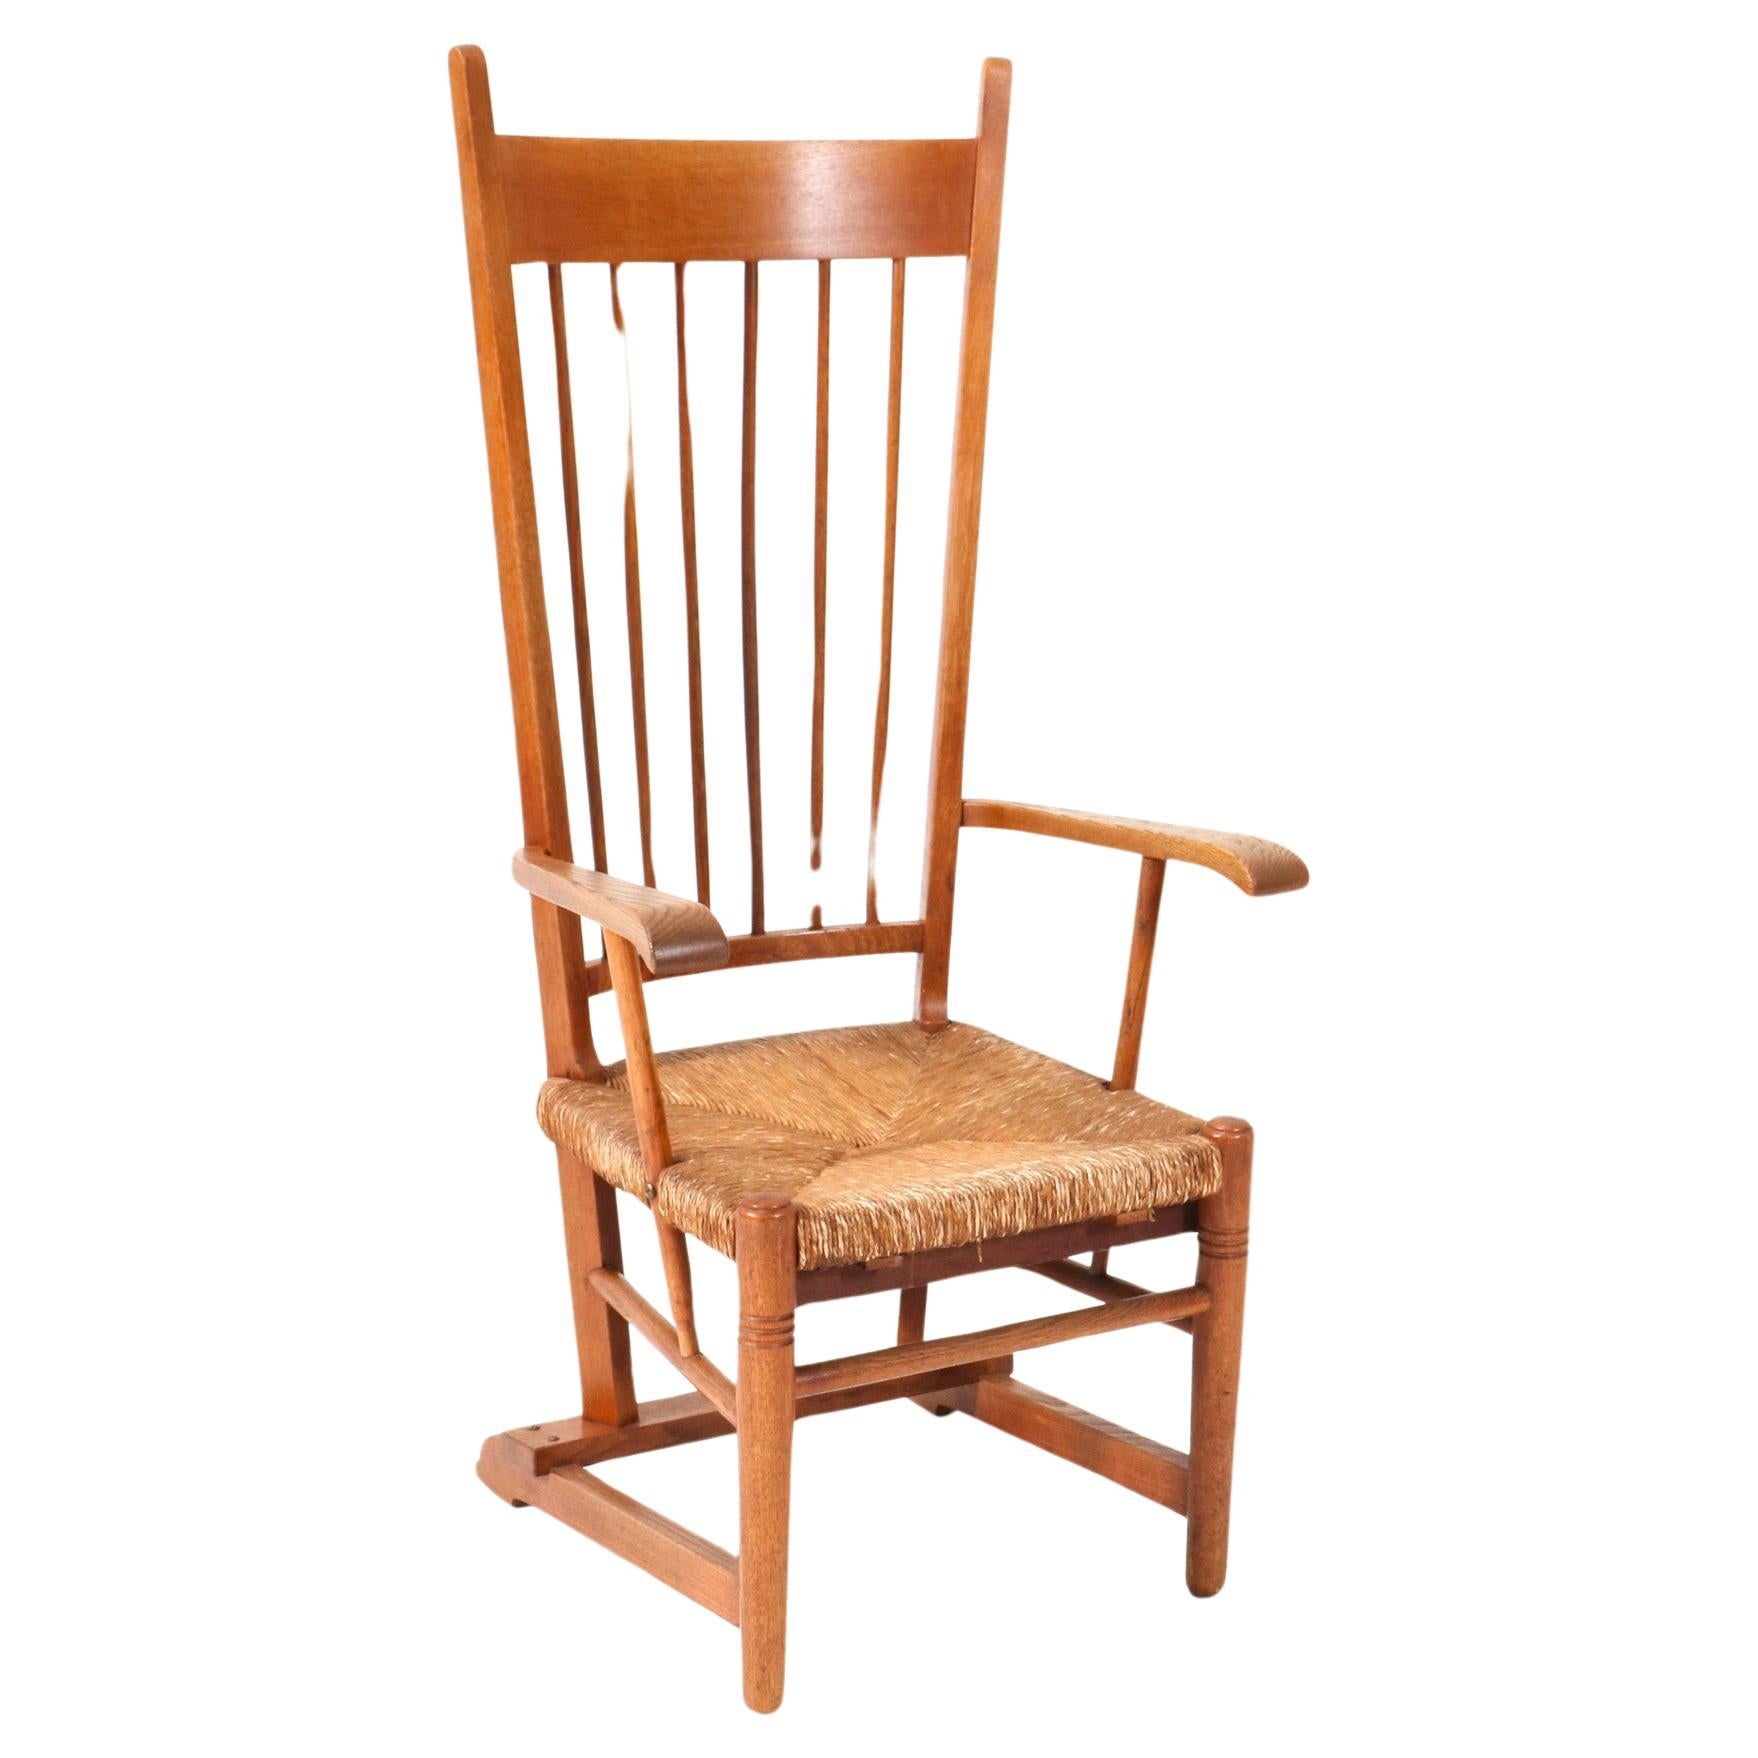 Oak Arts & Crafts Art Nouveau High Back Armchair with Rush Seat, 1900s For Sale